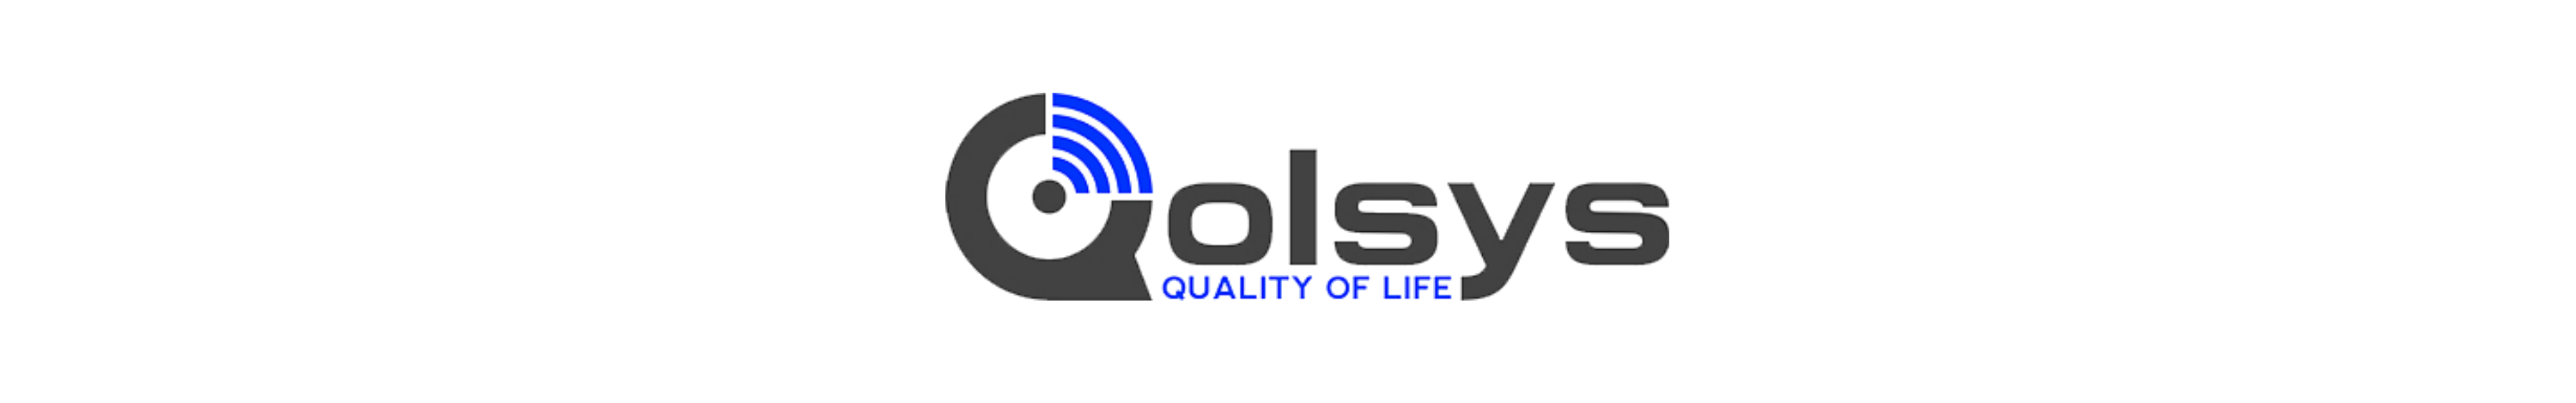 Qolsys - Quality Of Life Logo